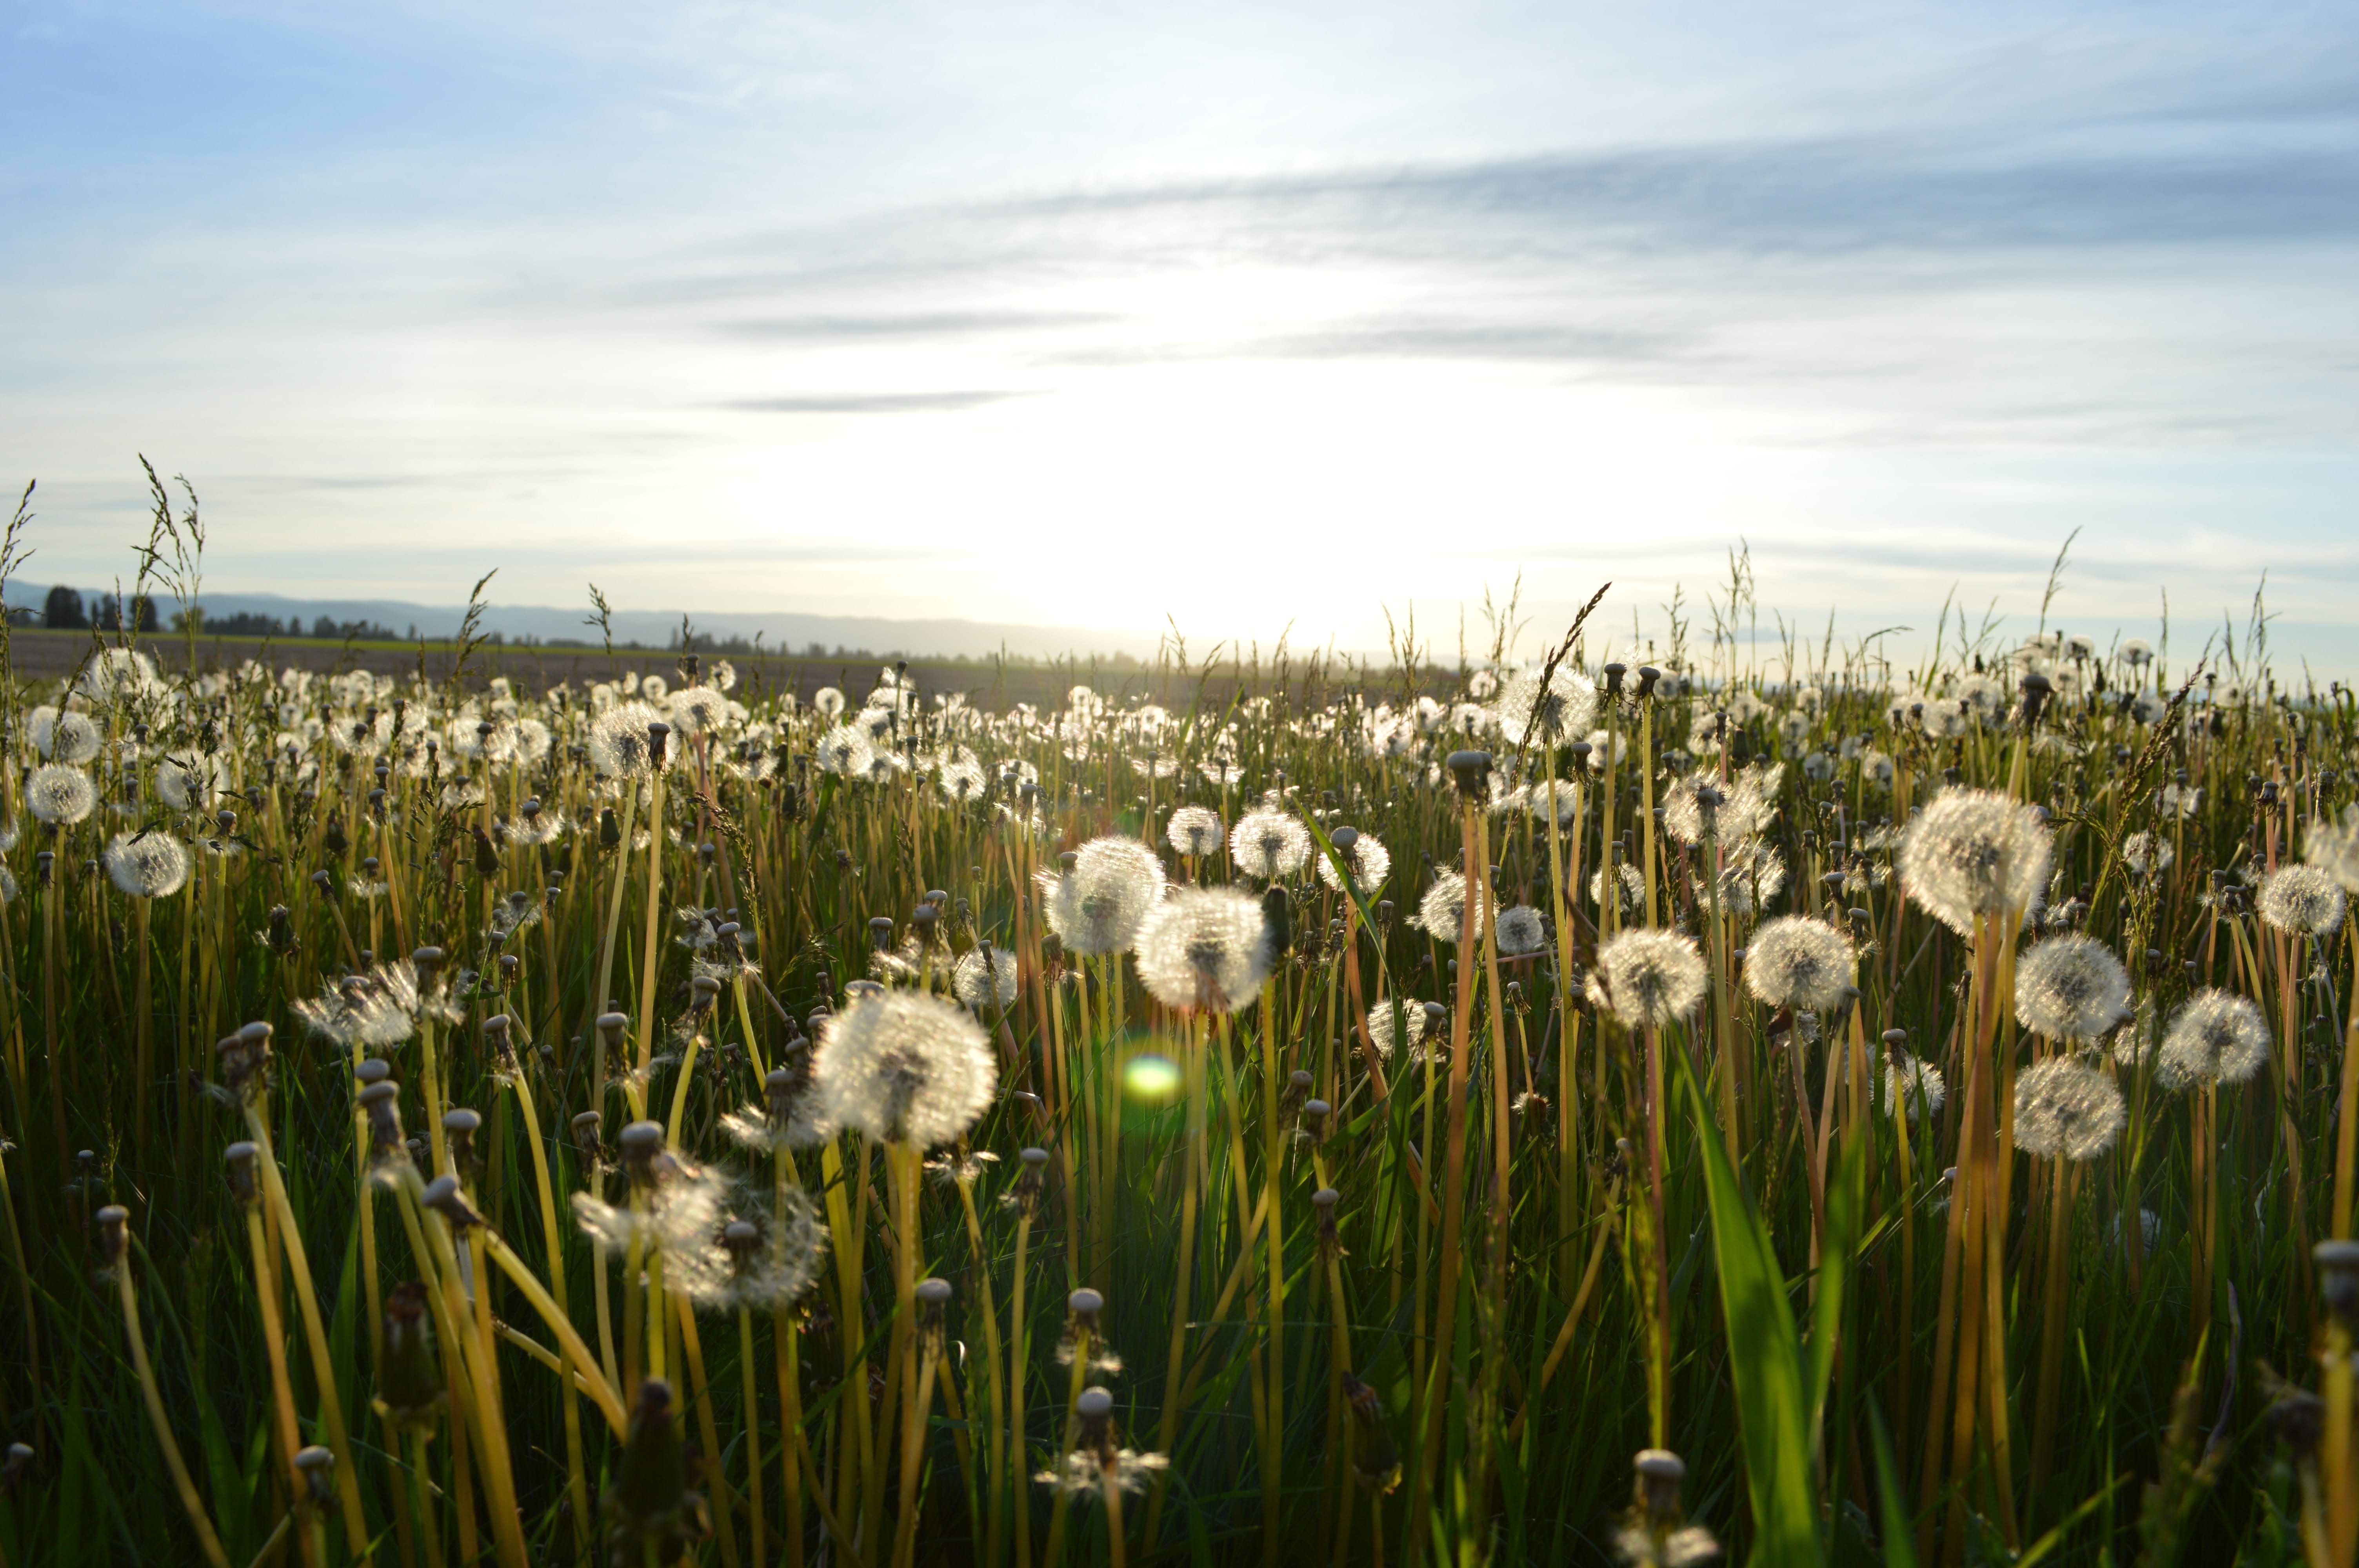 Field of dandelions gone to seed; image by Jason Long, via Unsplash.com.